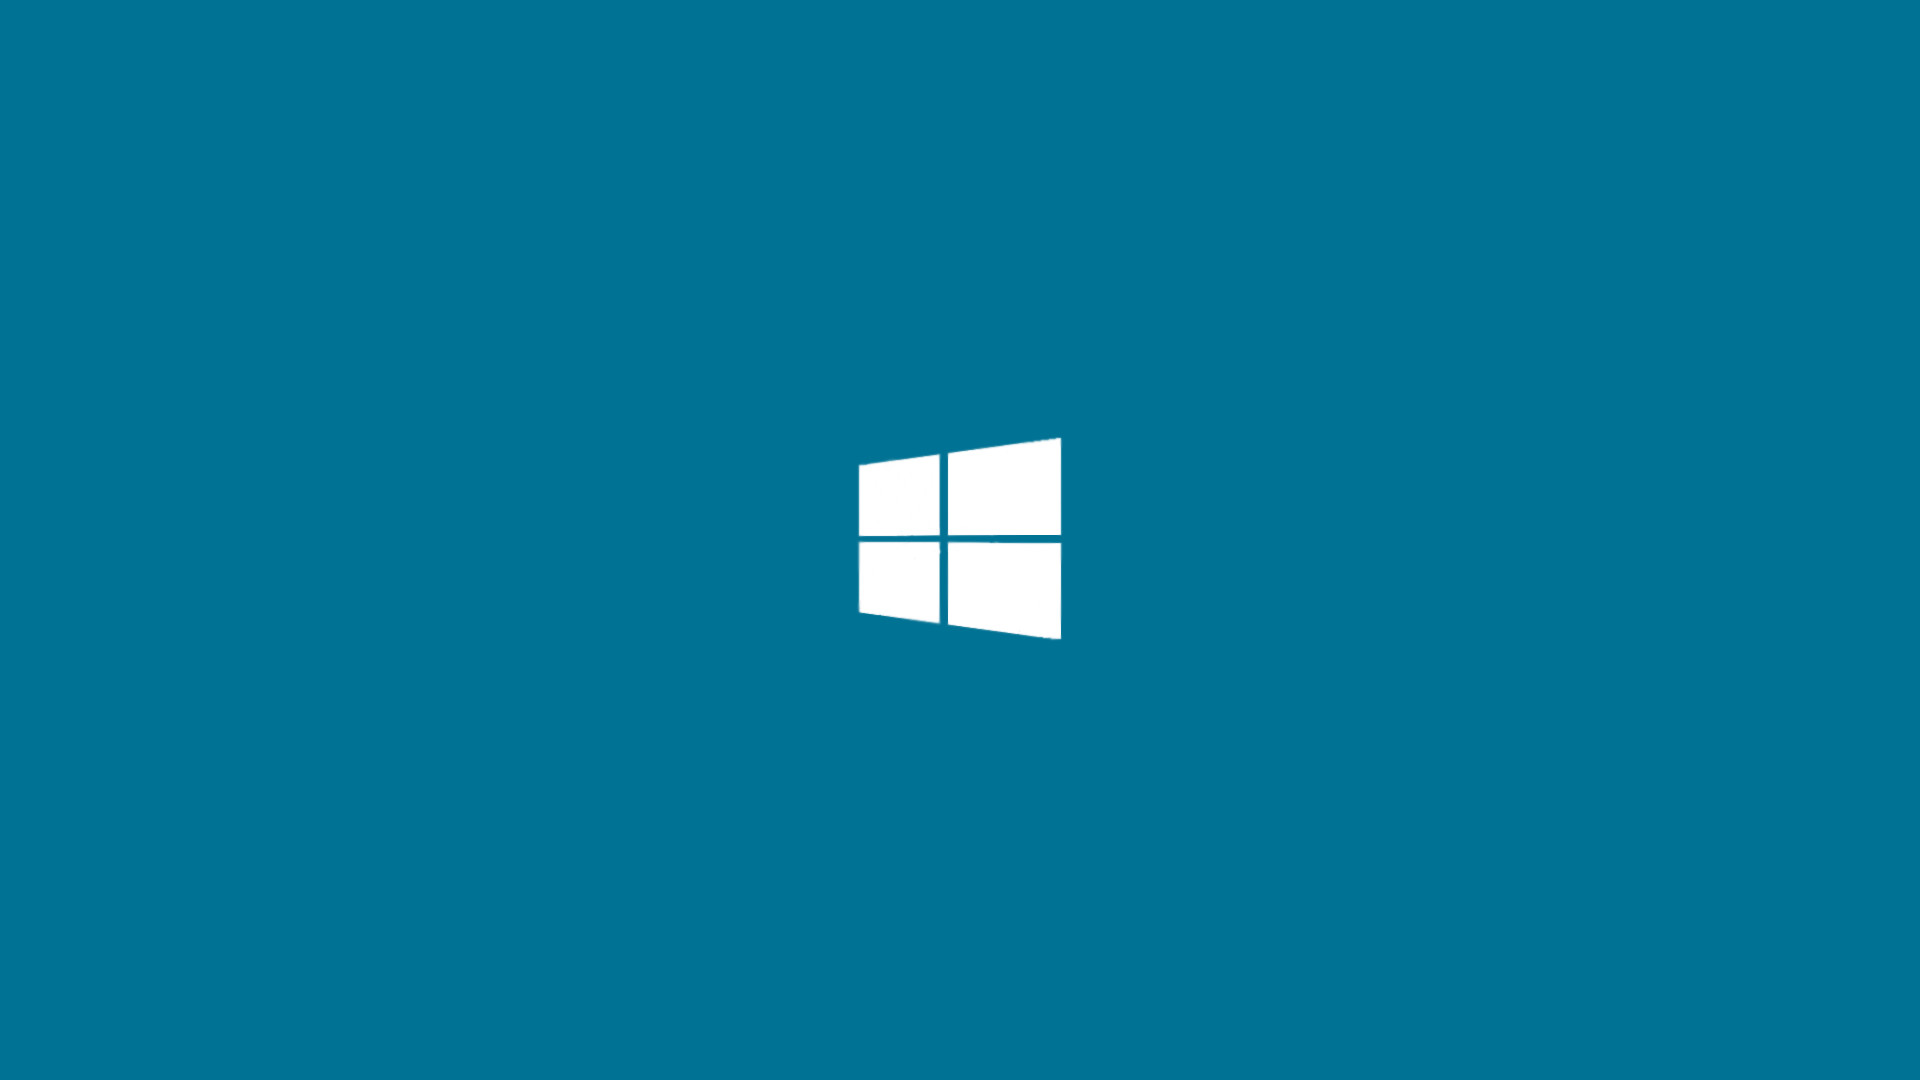 1920x1080 Motion Blue Windows 10 wallpaper | Windows 10 wallpapers | Pinterest |  Windows 10, Wallpaper and Wallpaper windows 10